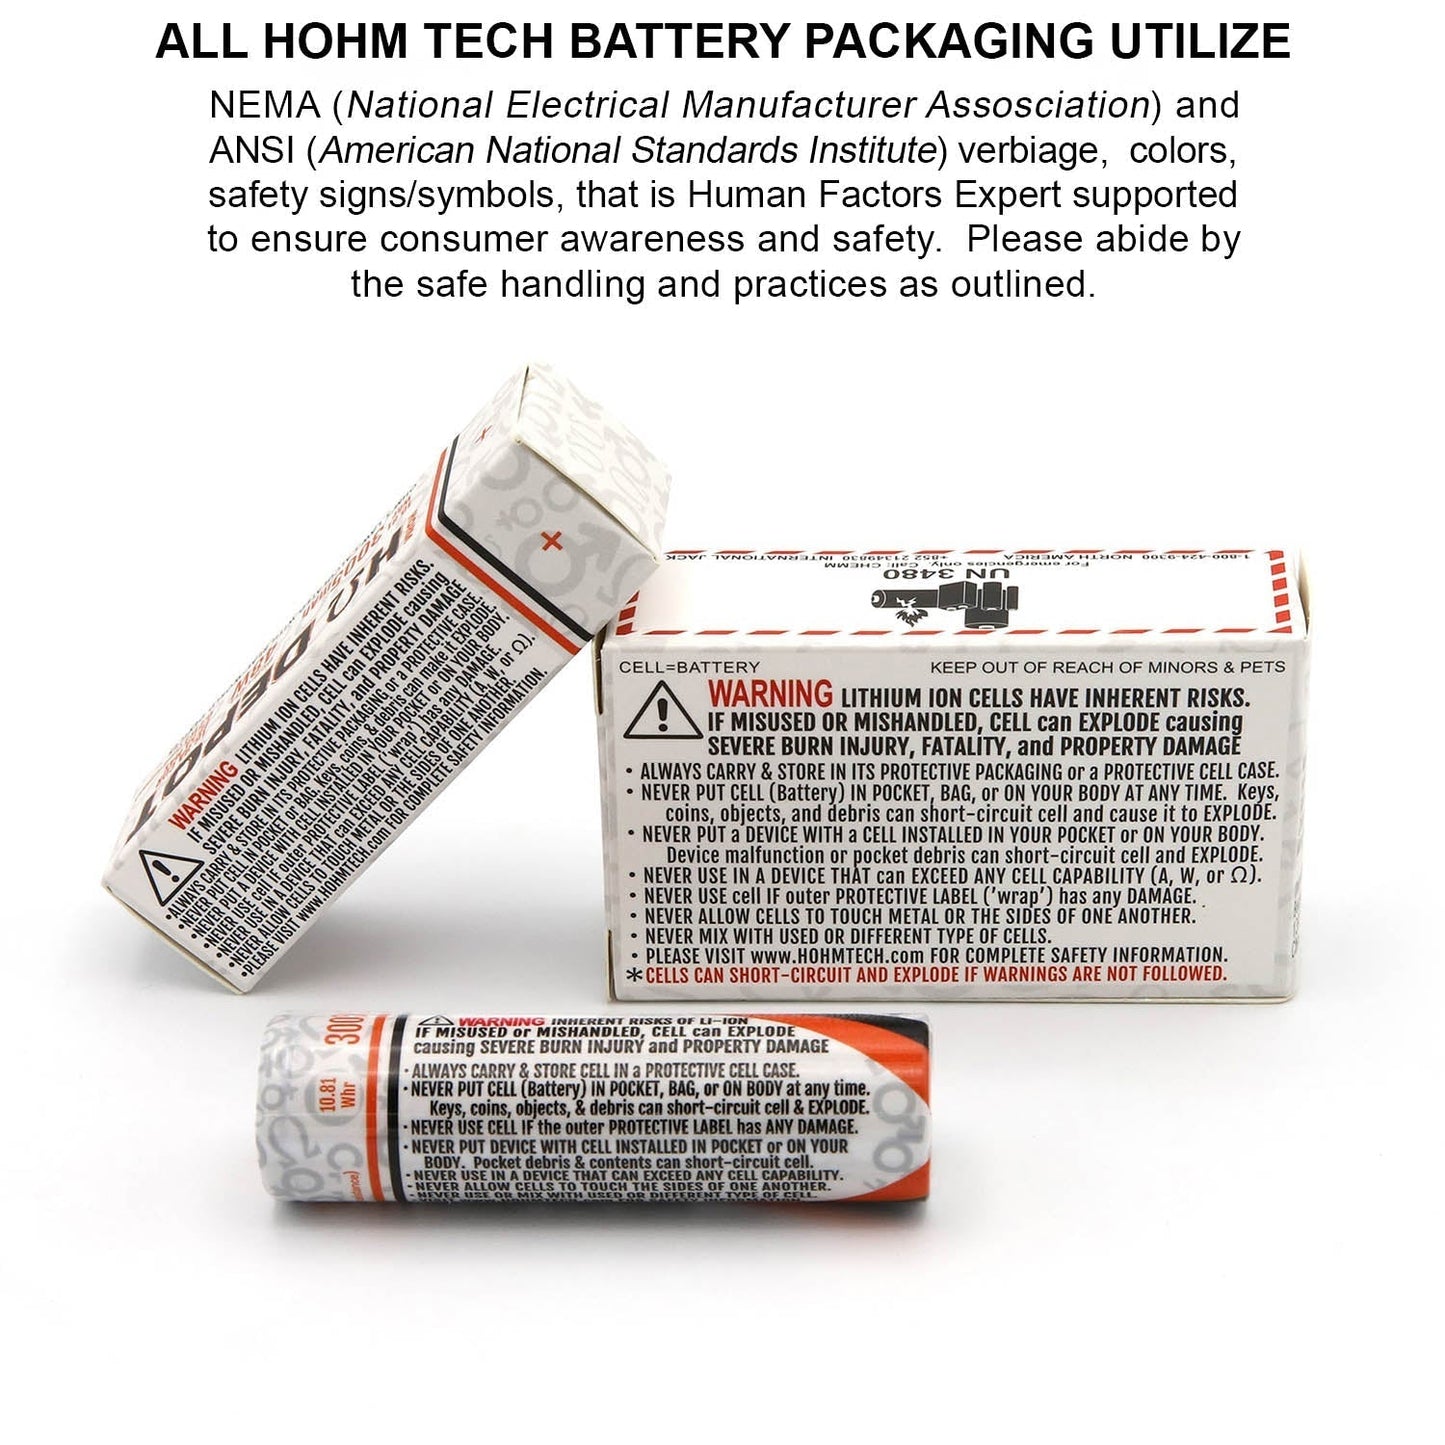 Hohm Tech HΩ Life 18650 - 3015mAH Battery